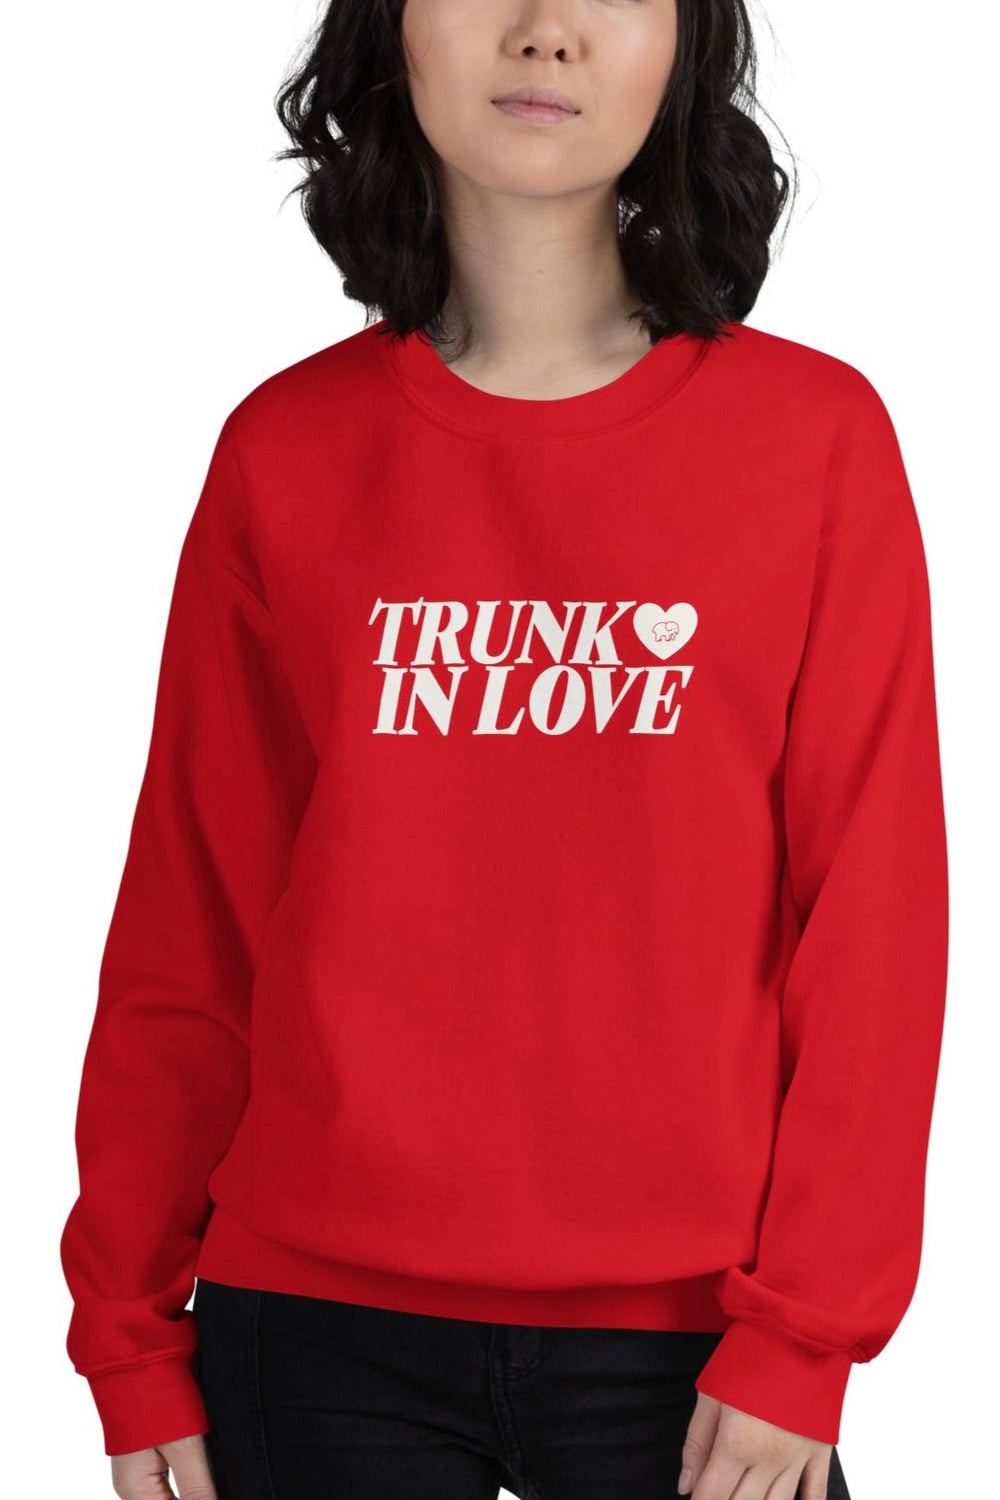 Trunk in Love Unisex Sweatshirt